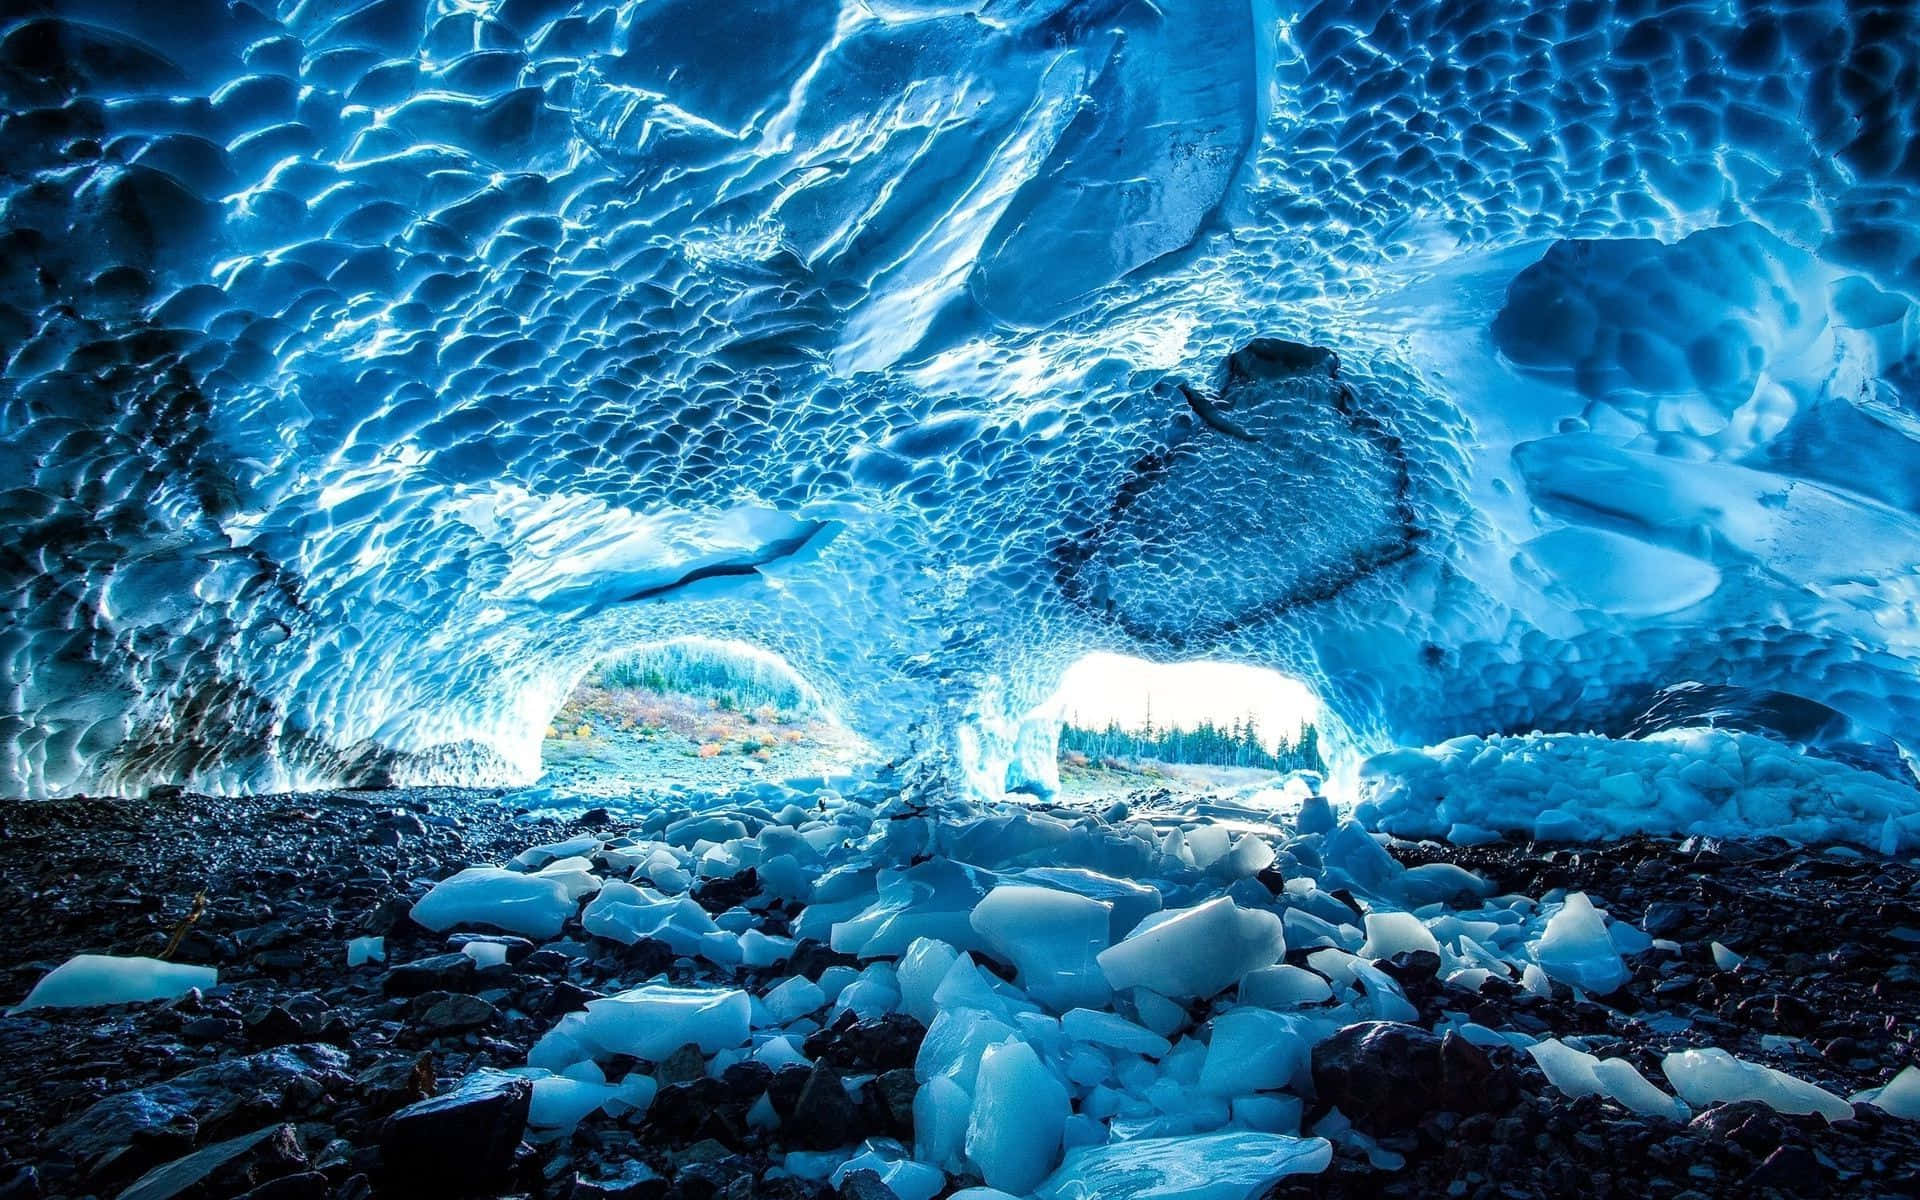 Explore the Frozen World of Ice